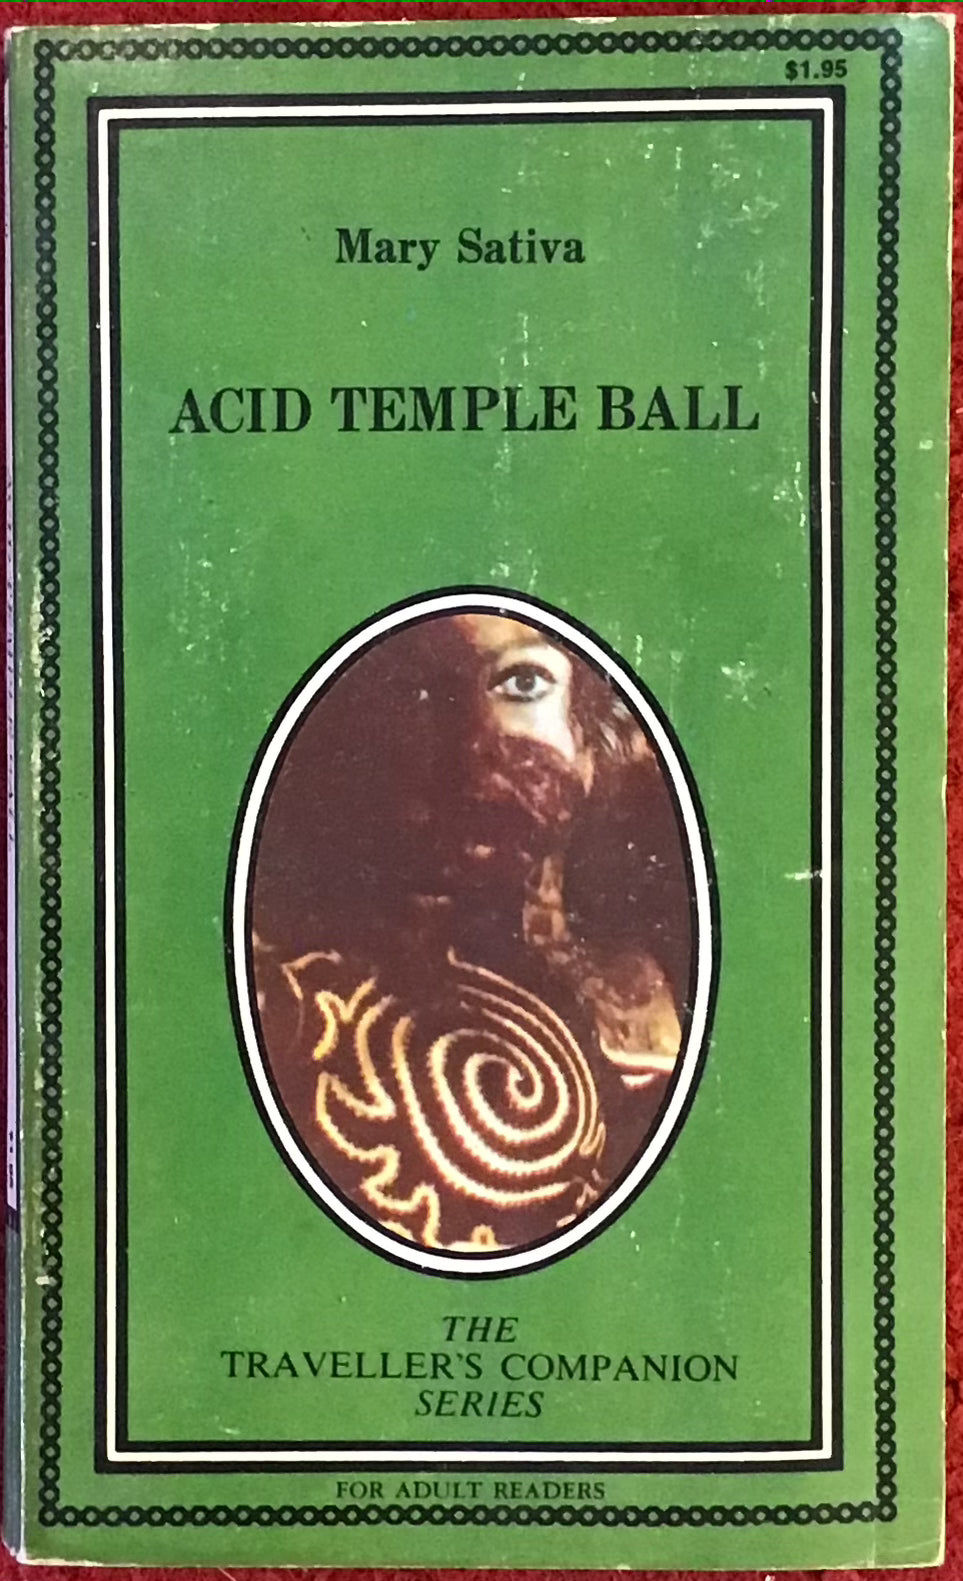 Acid Temple Ball by Mary Sativa *Rare* 1969 paperback